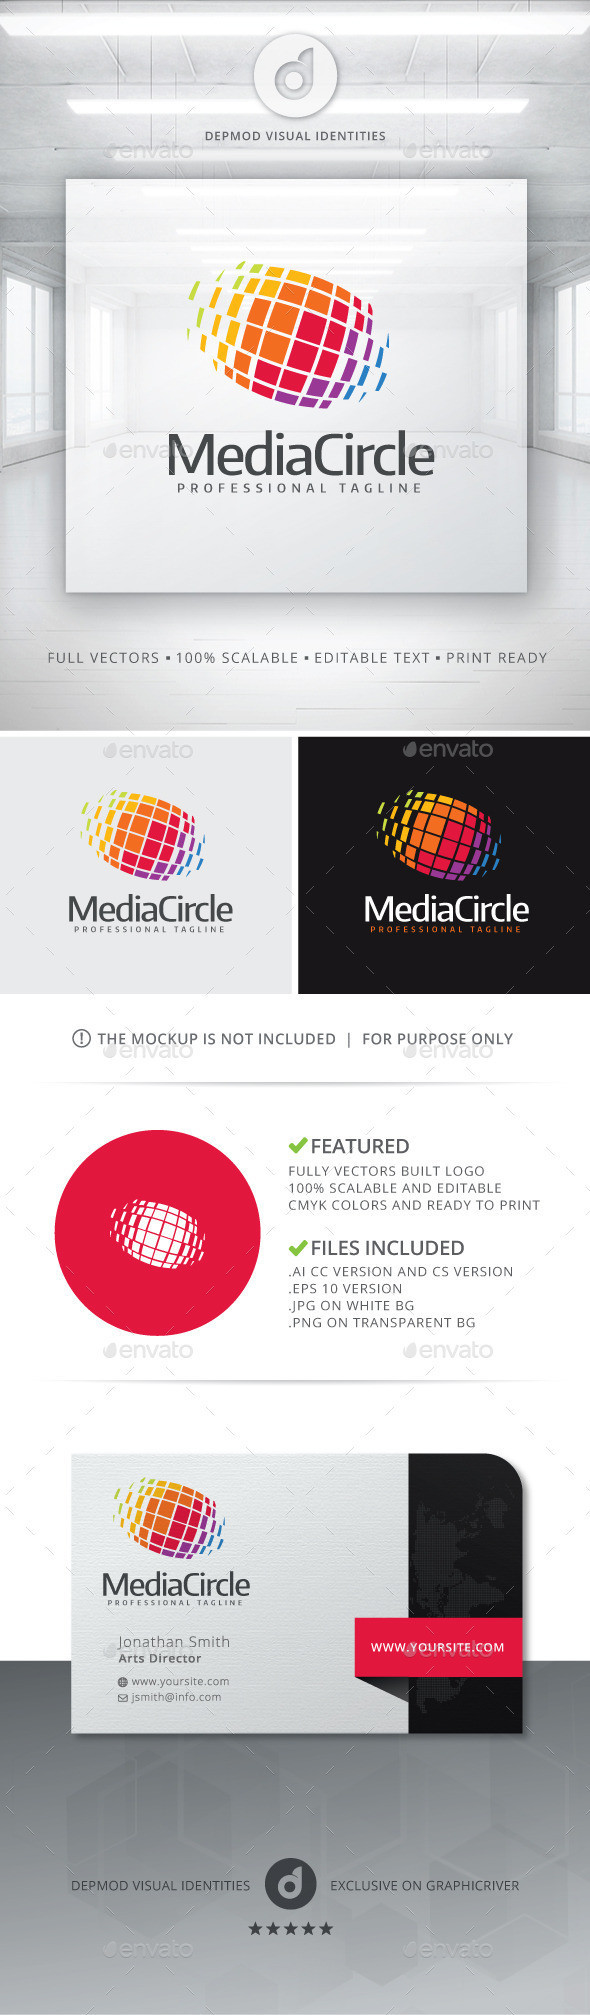 Media circle logo